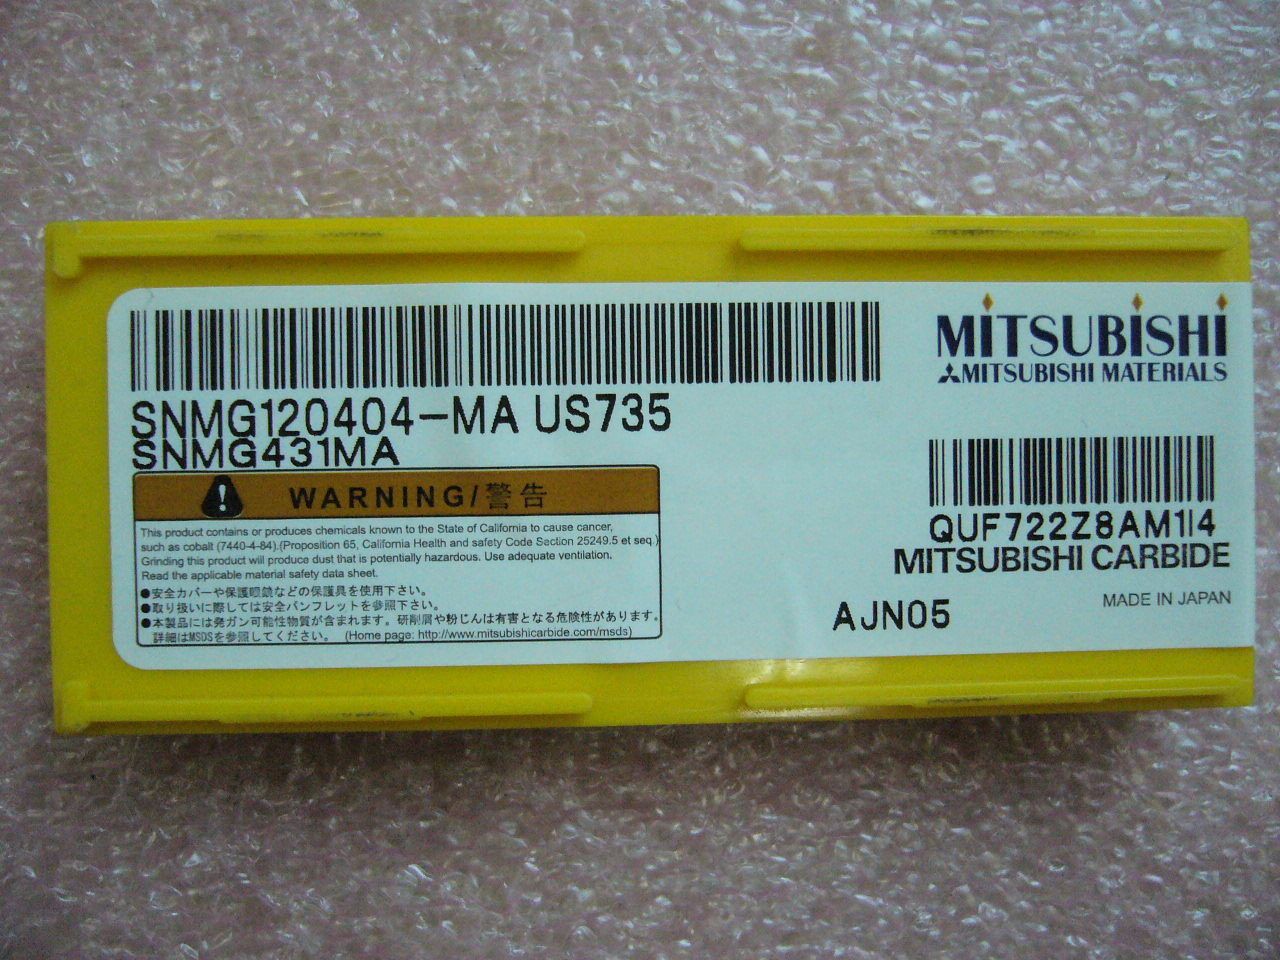 QTY 10x Mitsubishi SNMG431MA SNMG120404-MA US735 NEW